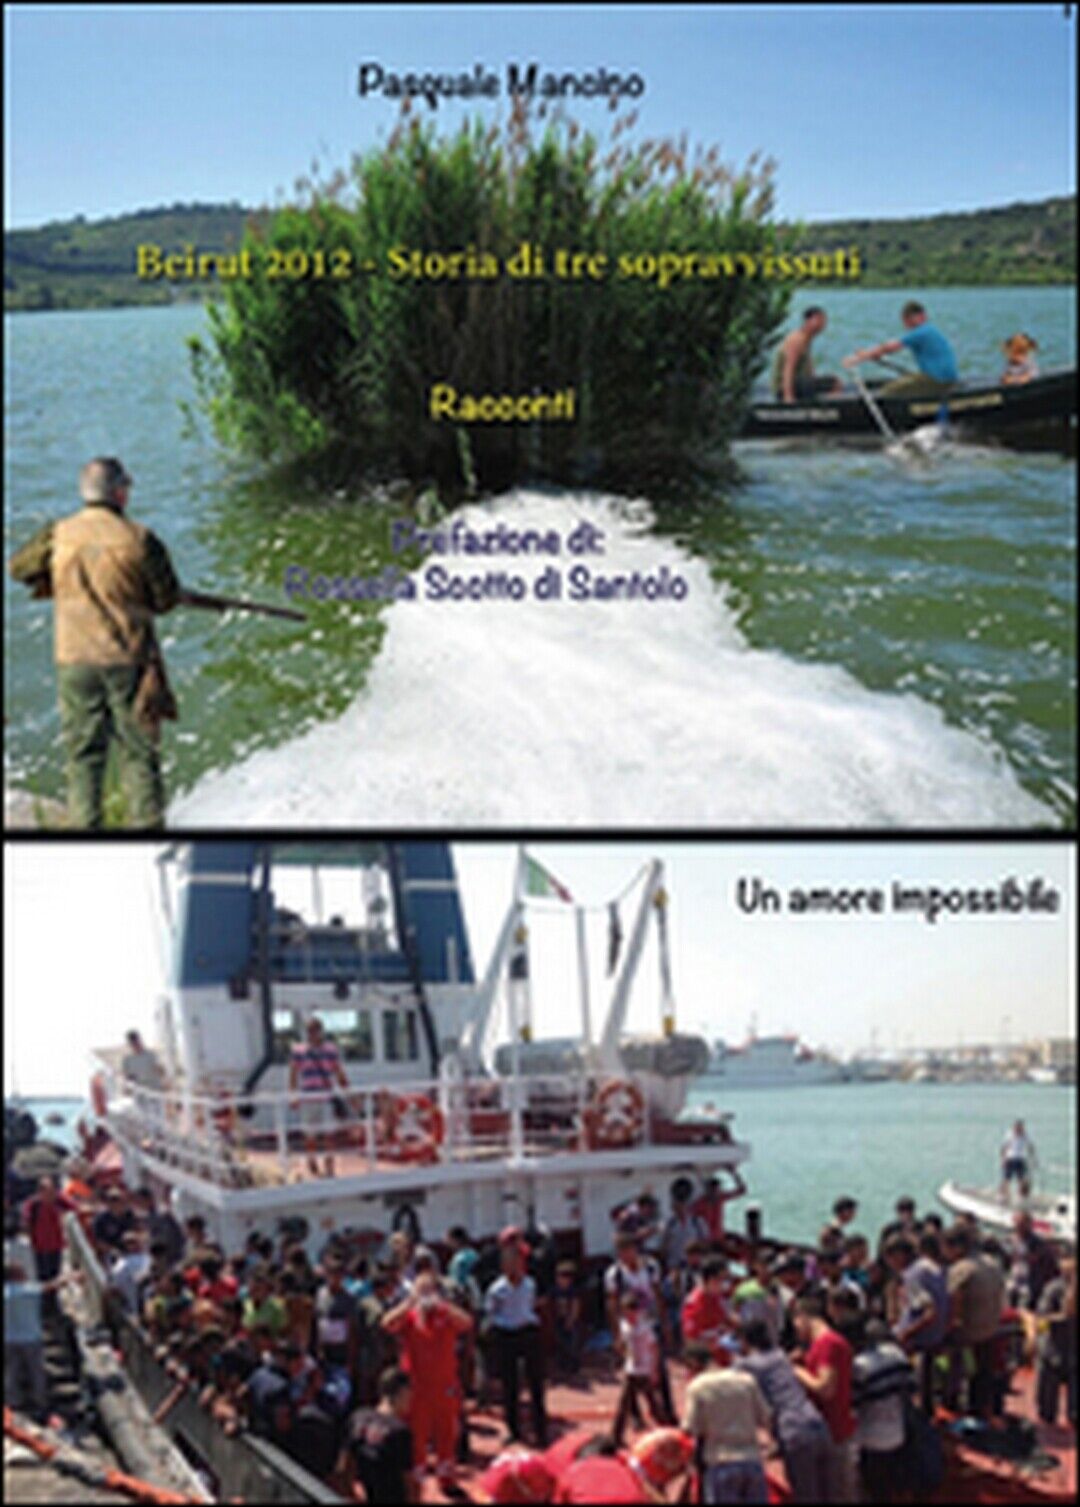 Beirut 2012. Storia di tre sopravvissuti, Pasquale Mancino,  2014,  Youcanprint